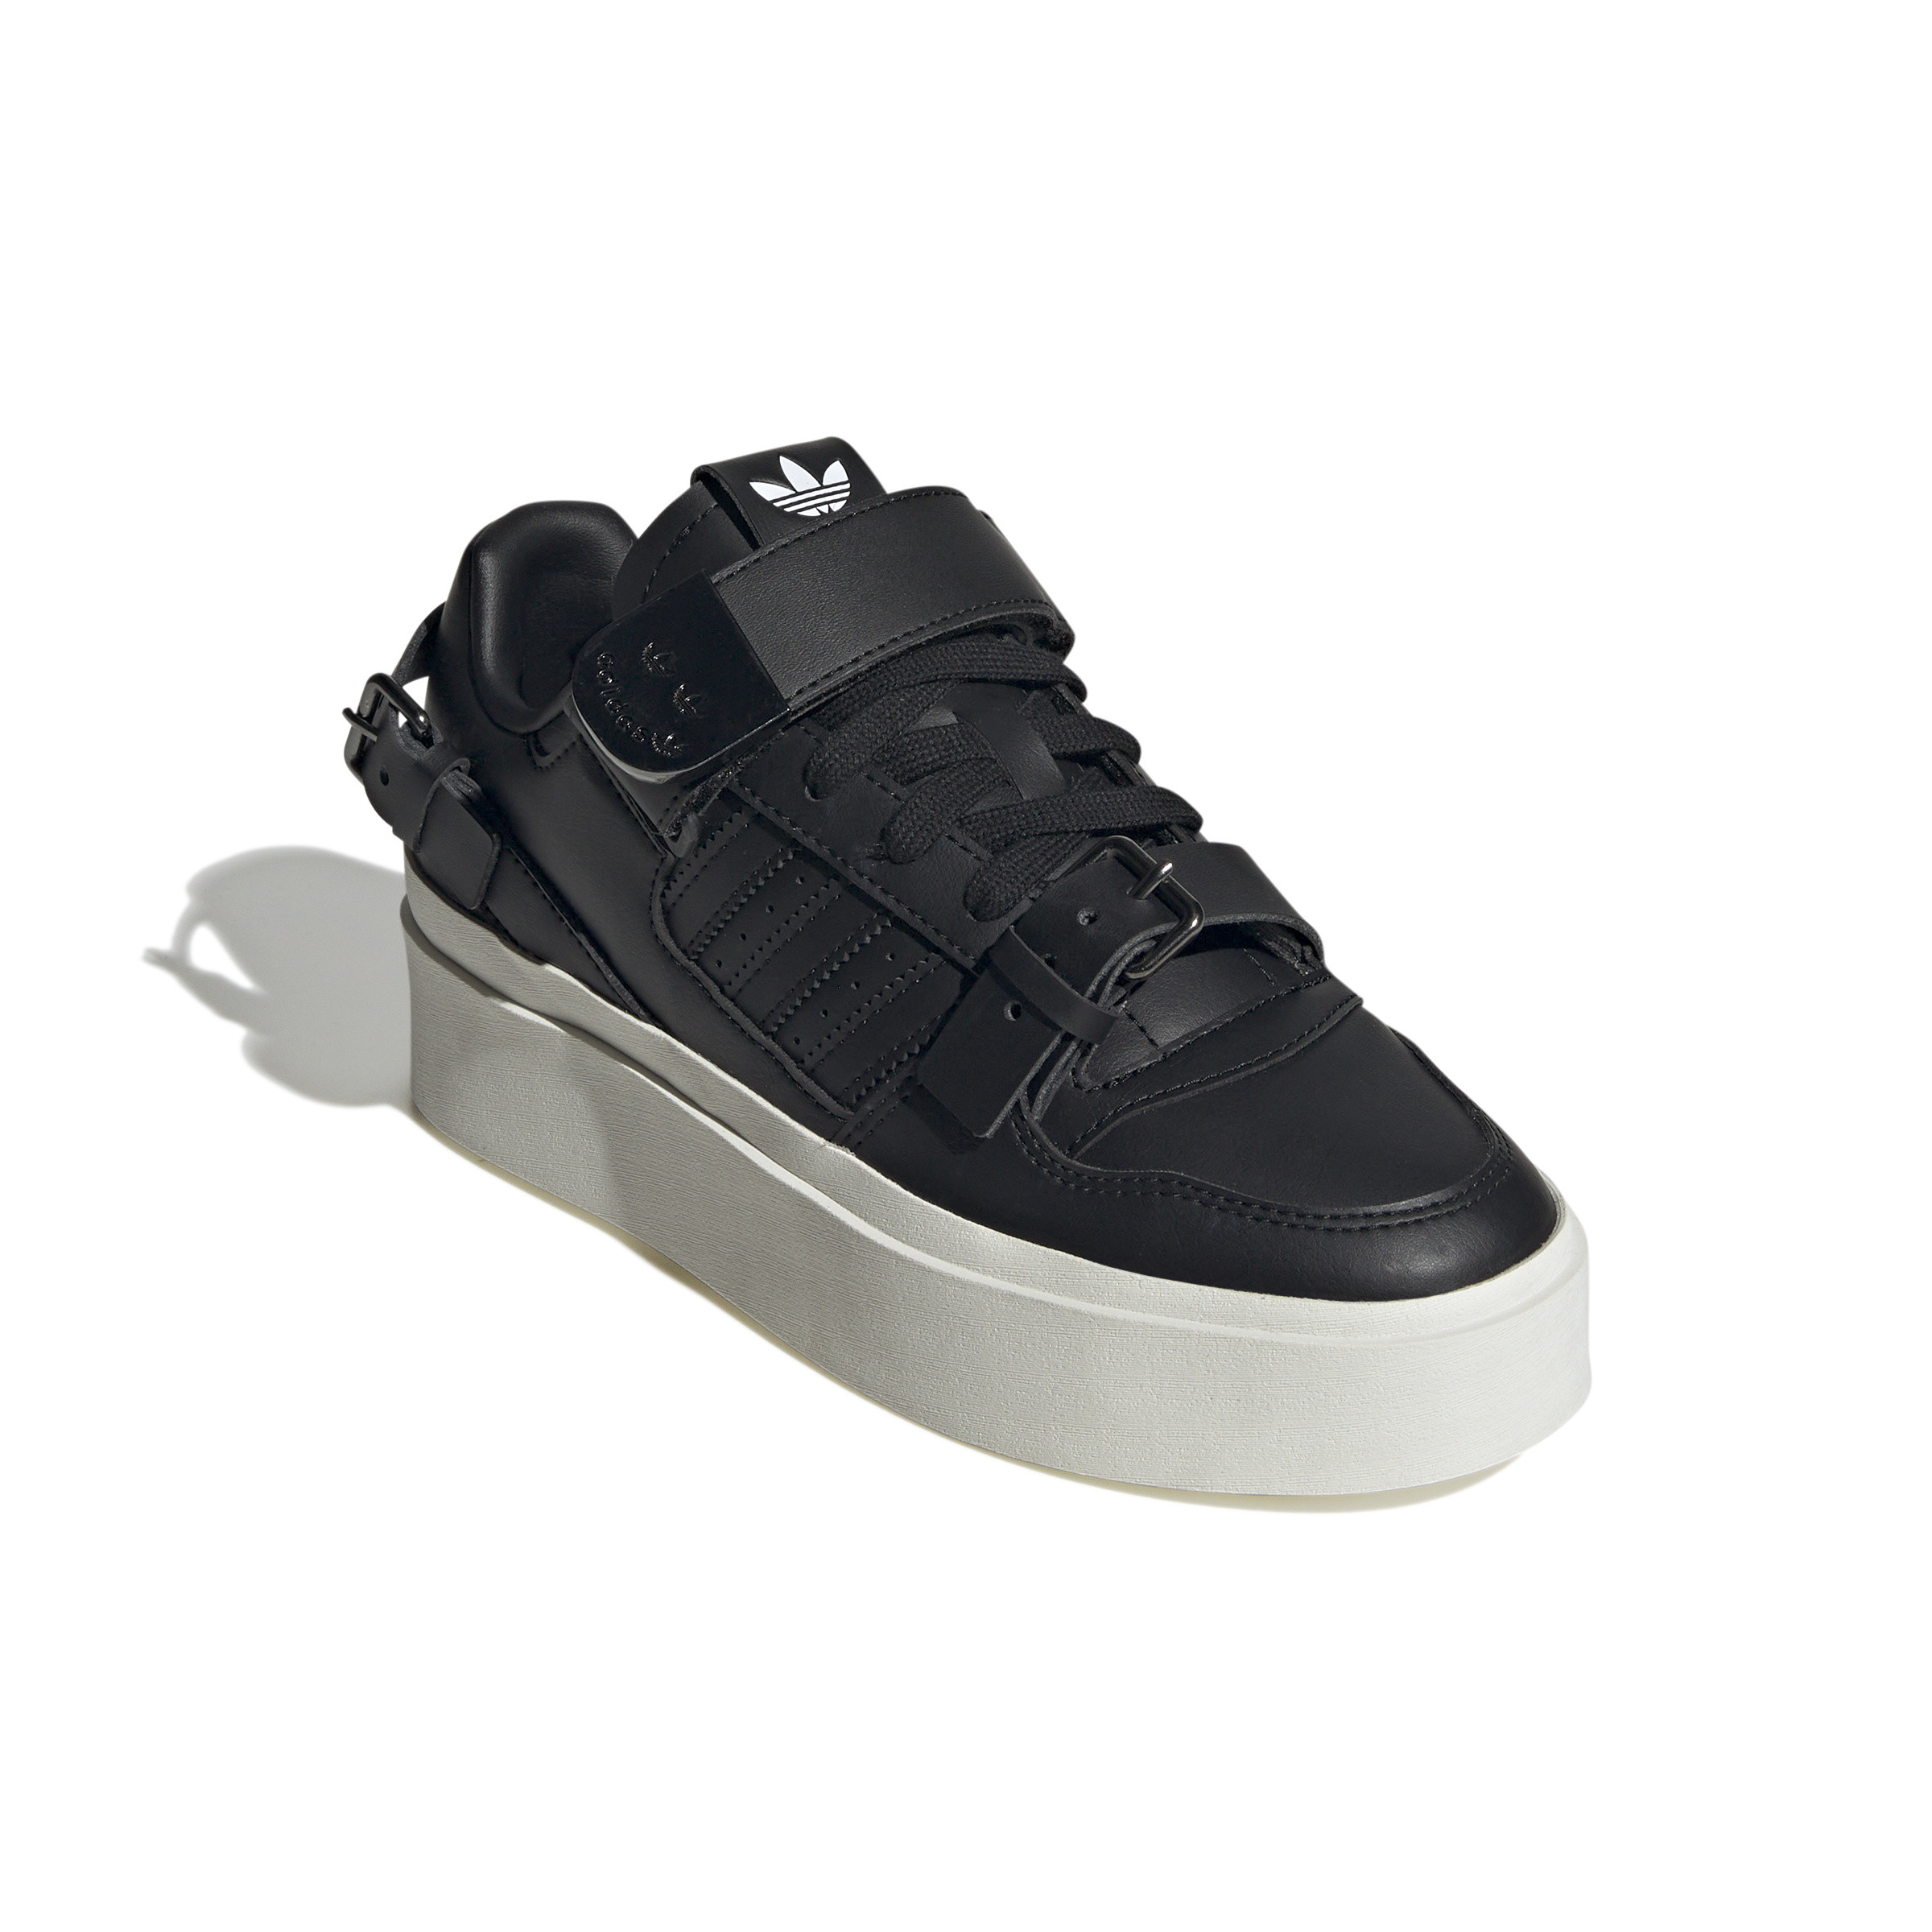 Adidas - Forum Bonega shoes, Black, large image number 1